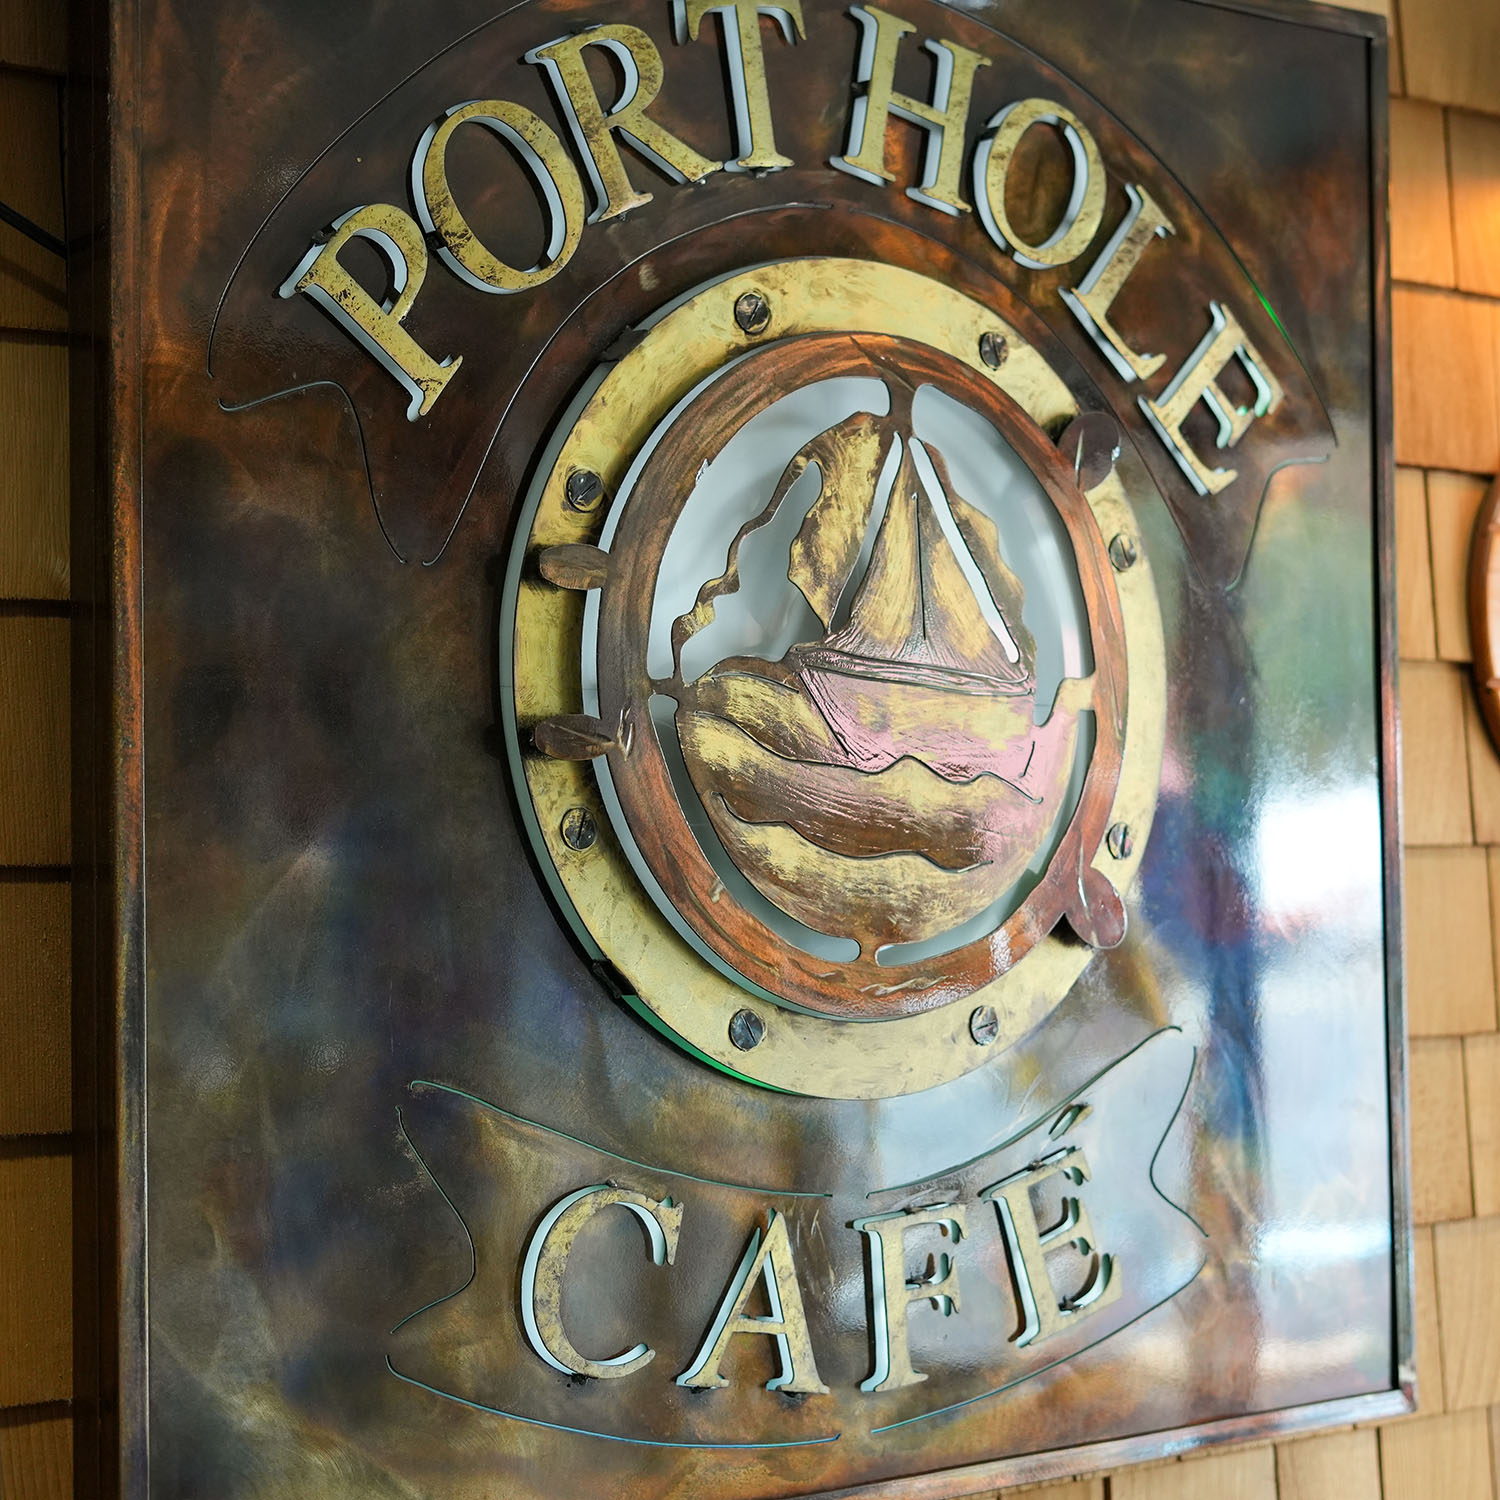 Port Hole Cafe Gold Beach Oregon